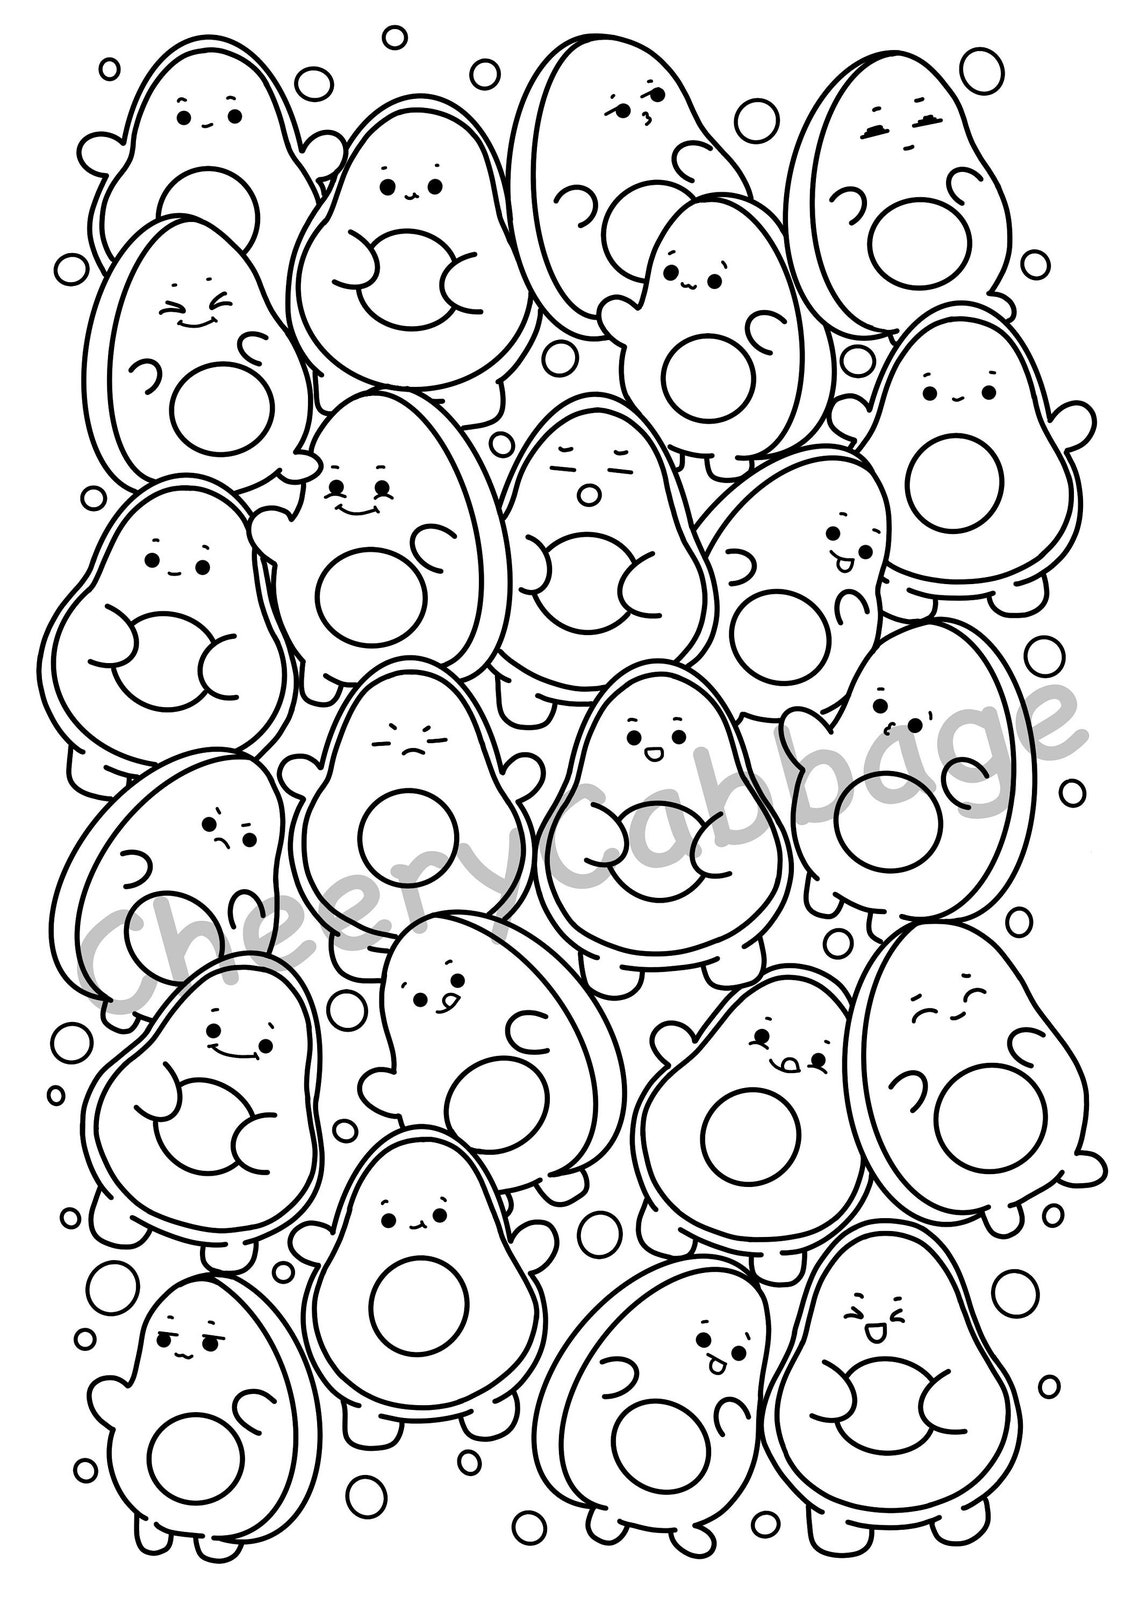 kawaii-avocado-coloring-page-cute-doodle-coloring-page-etsy-nederland